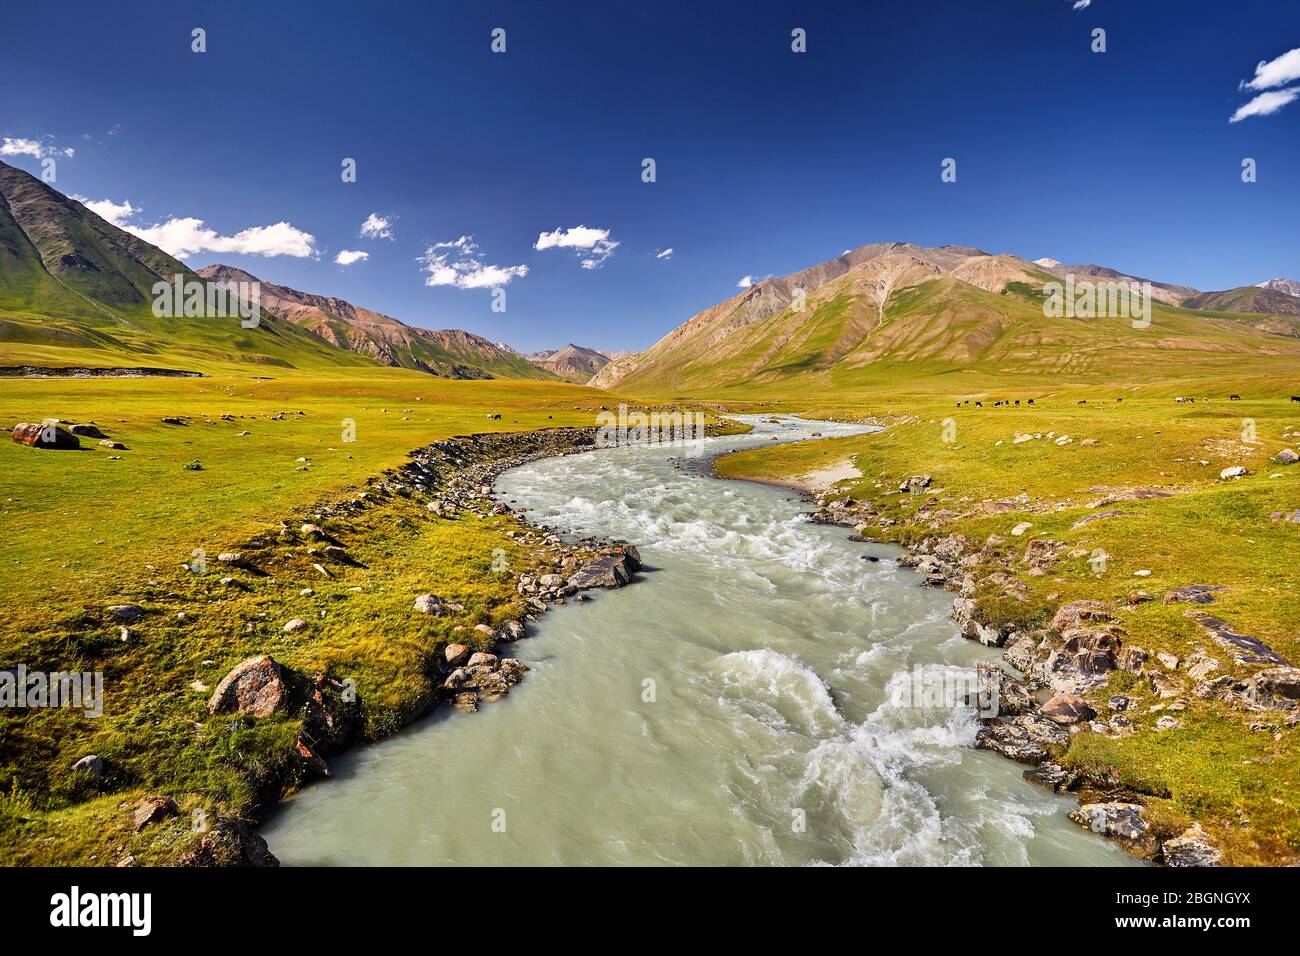 Mountain River im Tal im Blue Sky in Kirgisistan Stockfoto